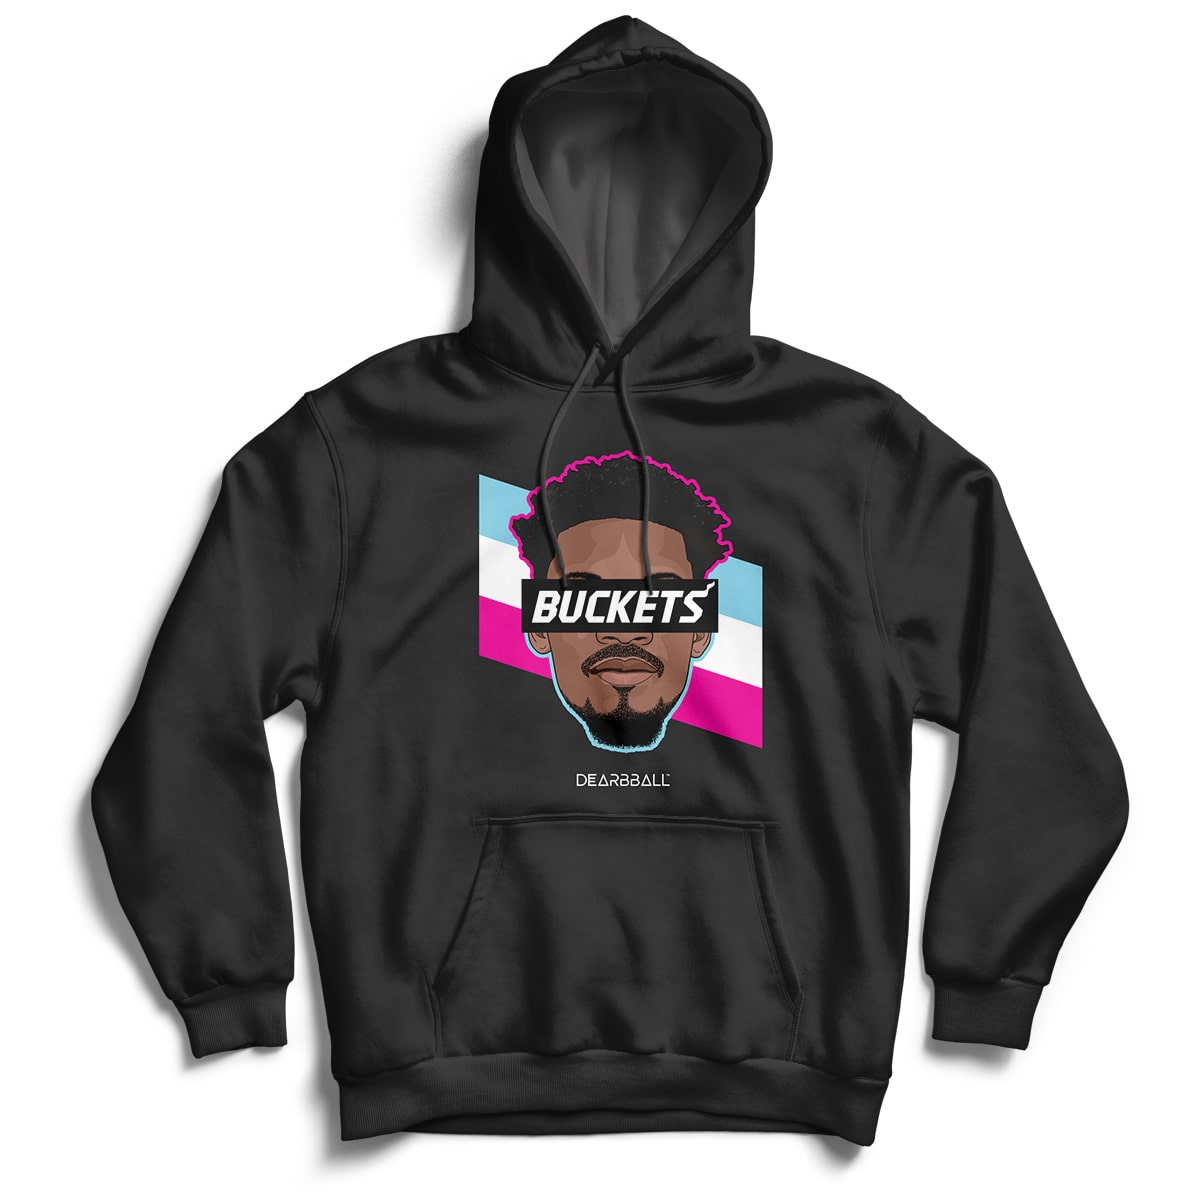 [CHILDREN] DearBBall Hooded Sweatshirt - BUCKETS Miami Vice Edition